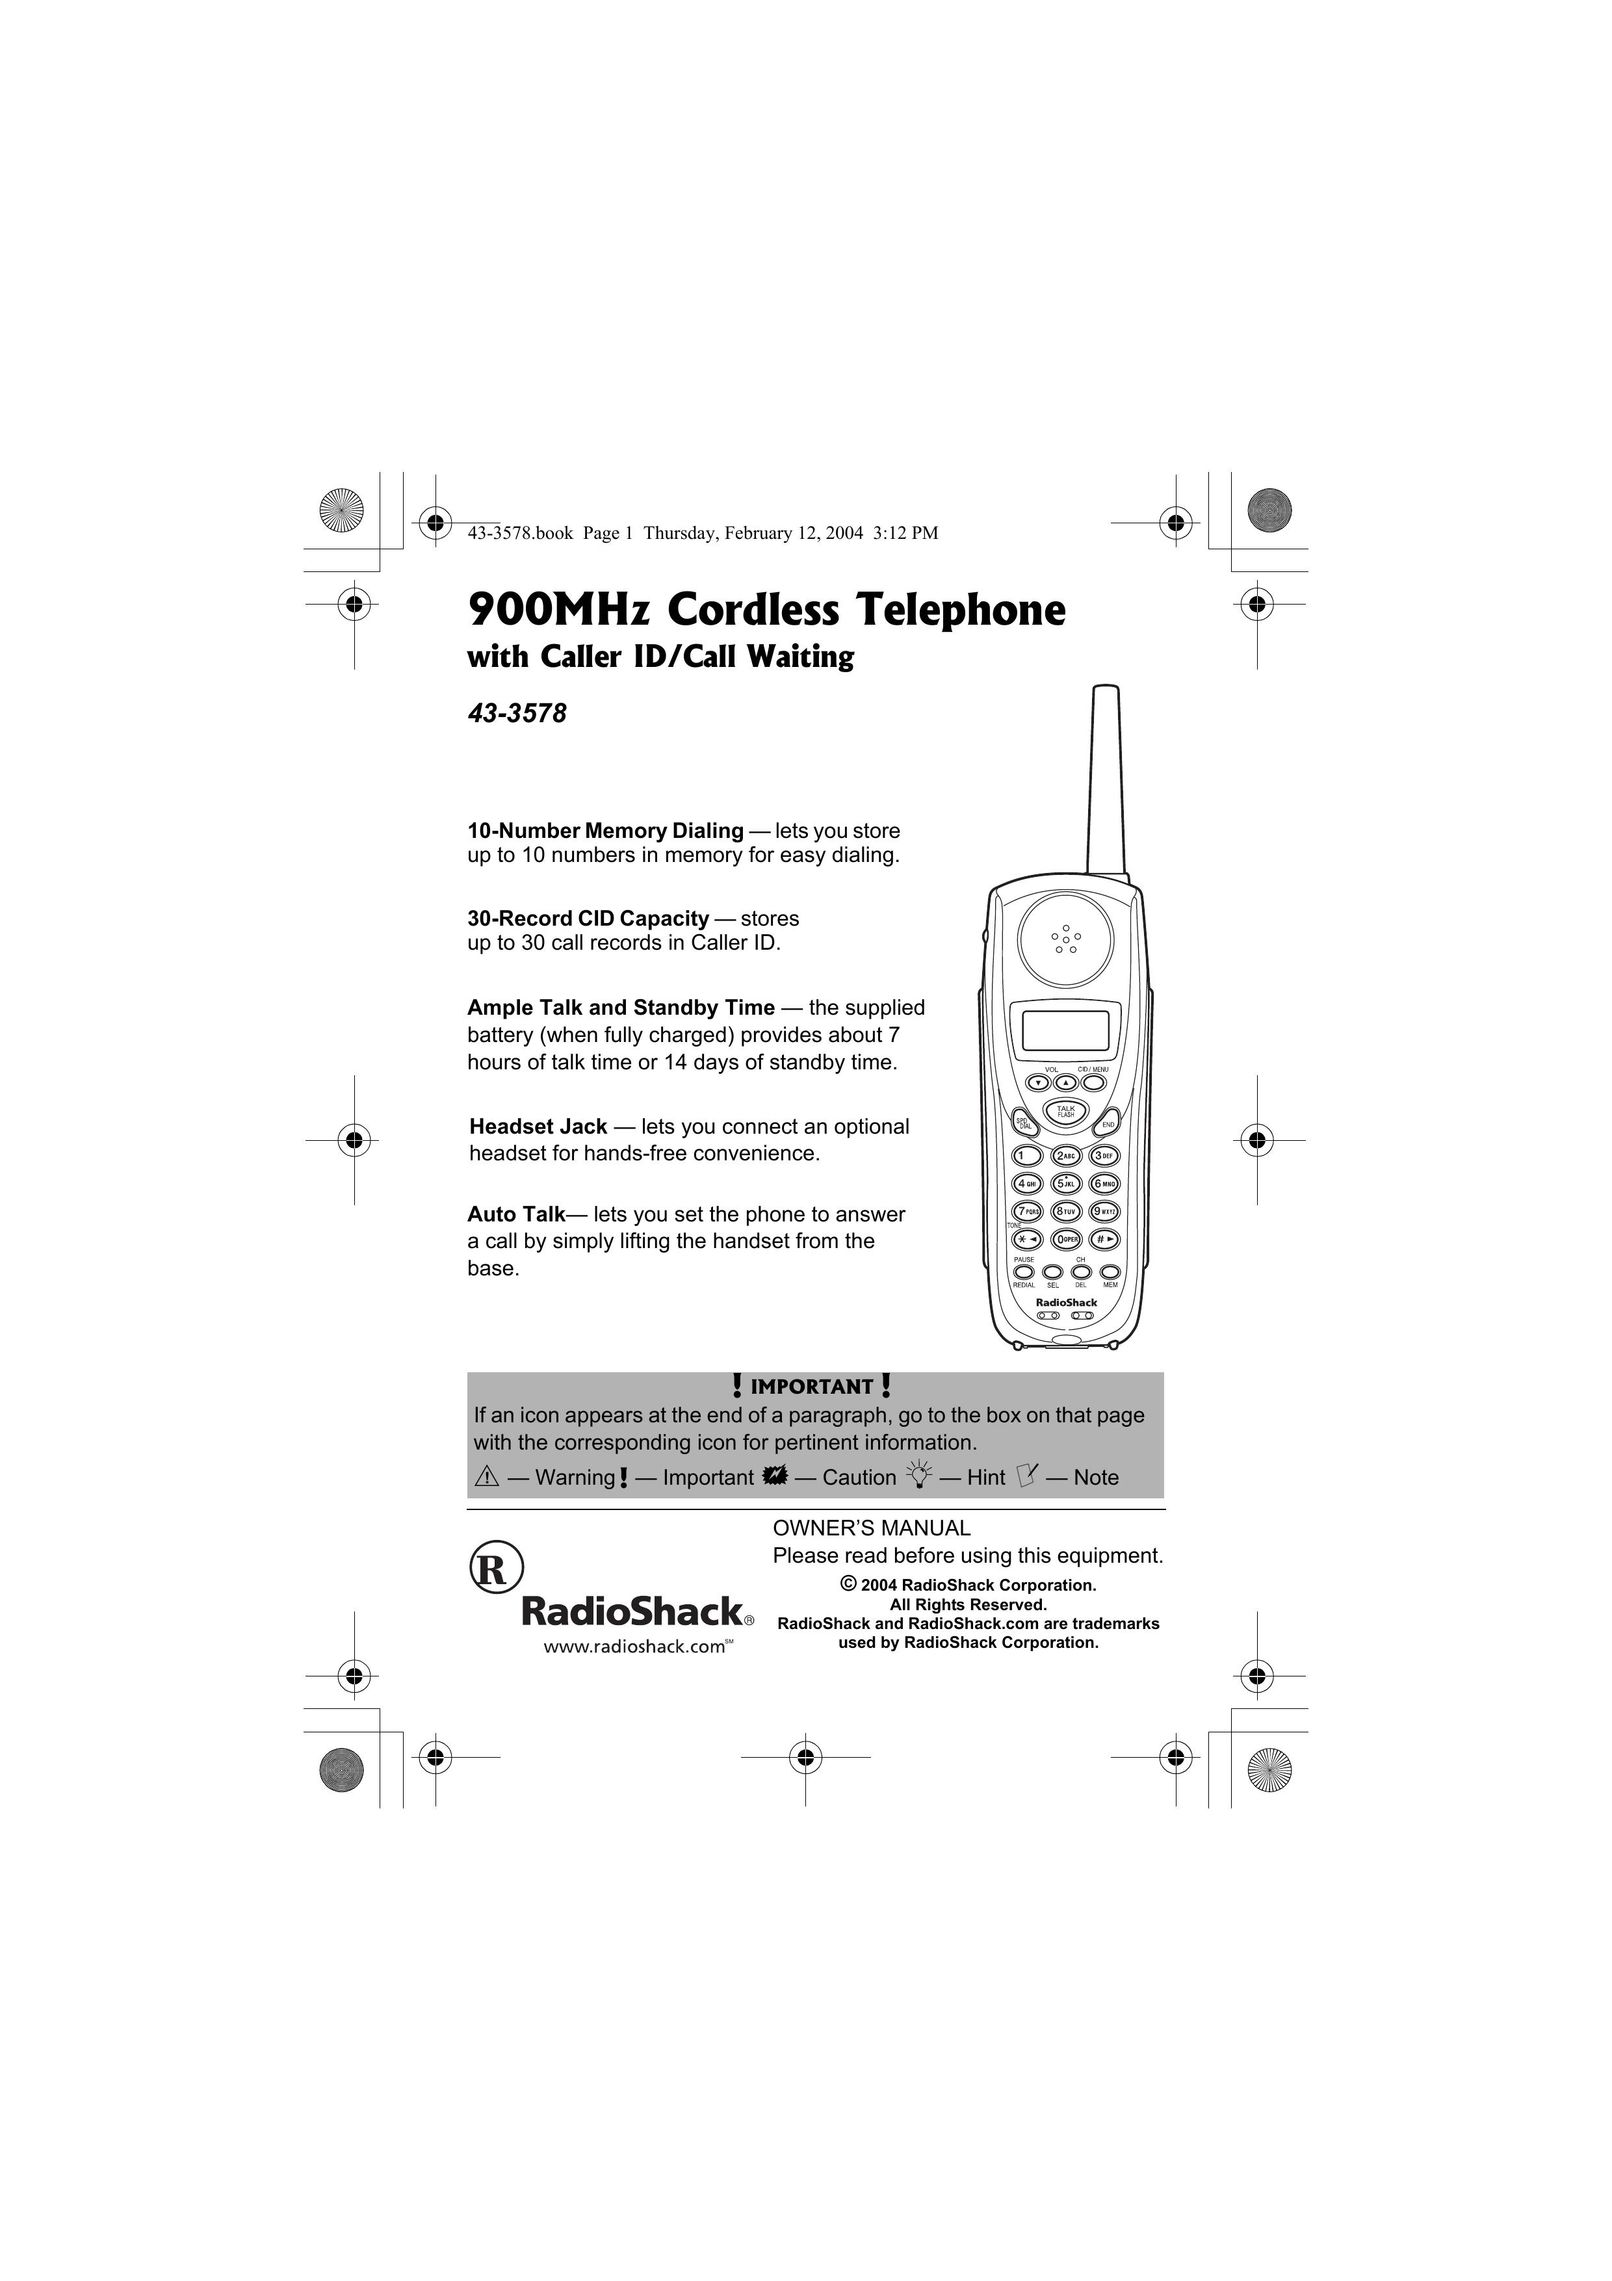 Radio Shack 43-3578 Cordless Telephone User Manual